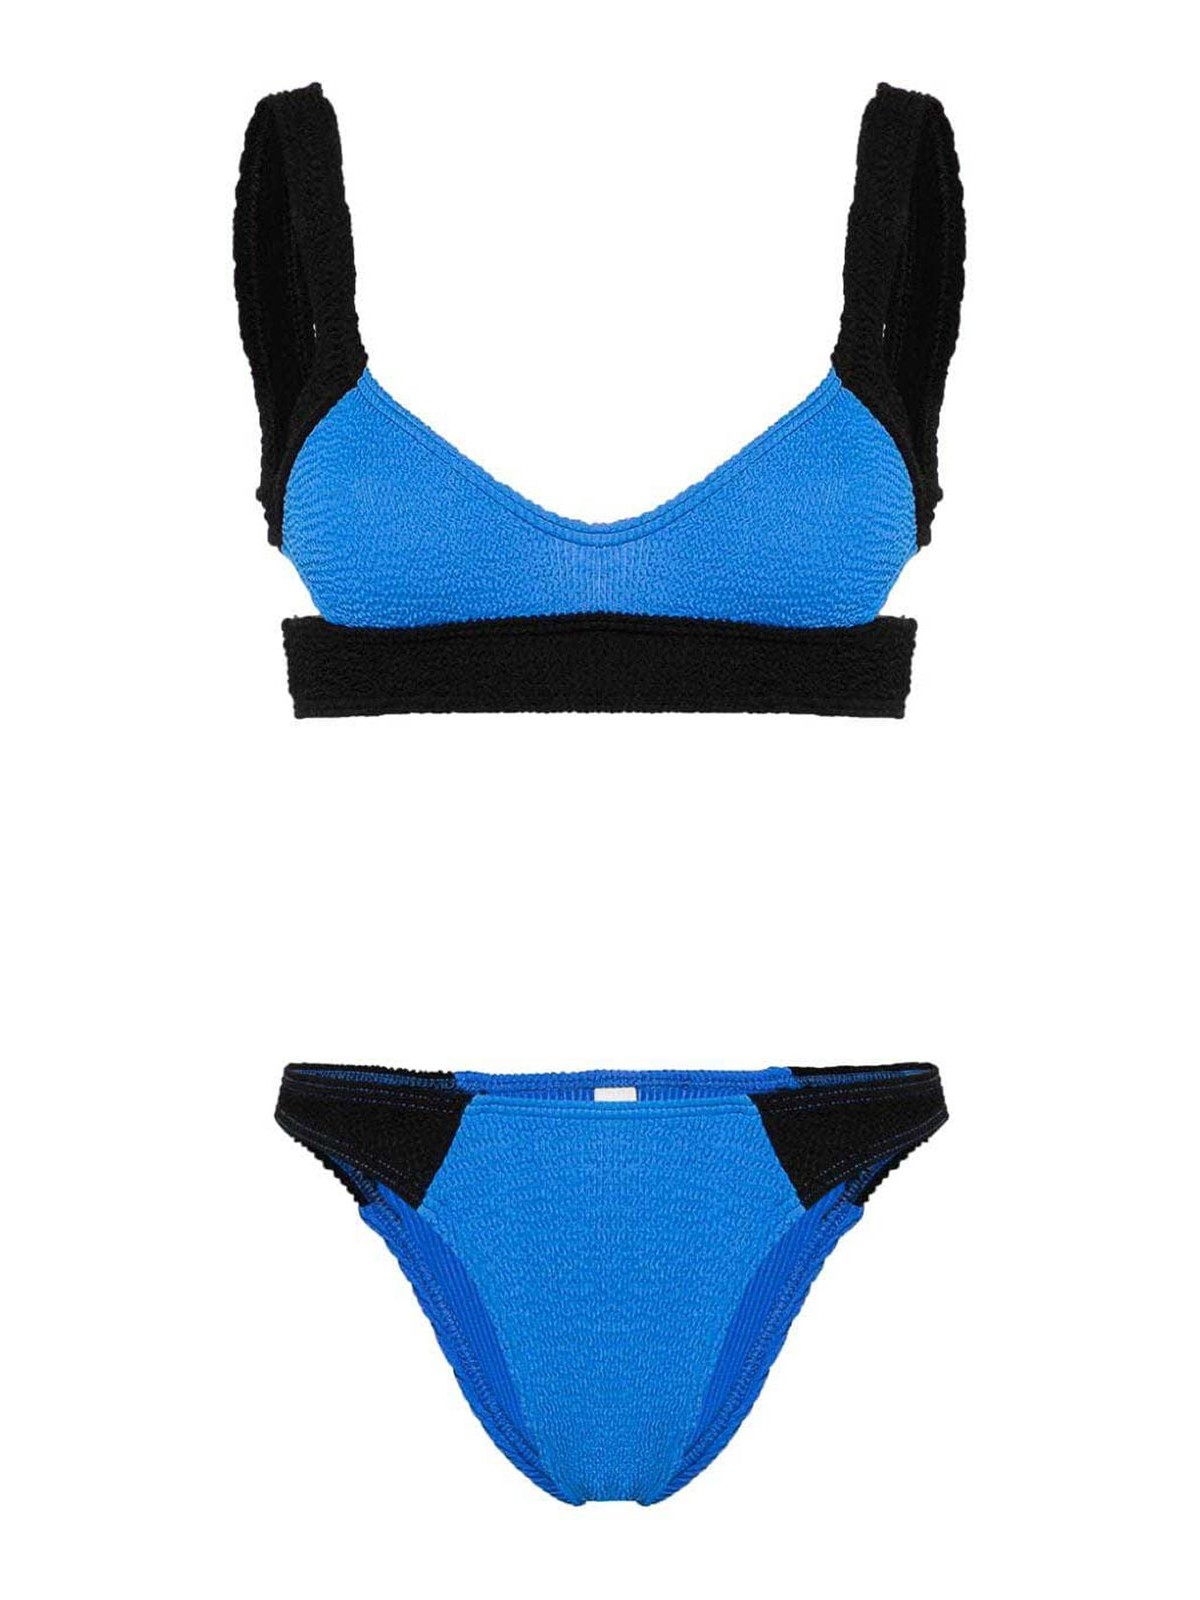 Bondeye Bikini Set Cut Out Bra In Blue